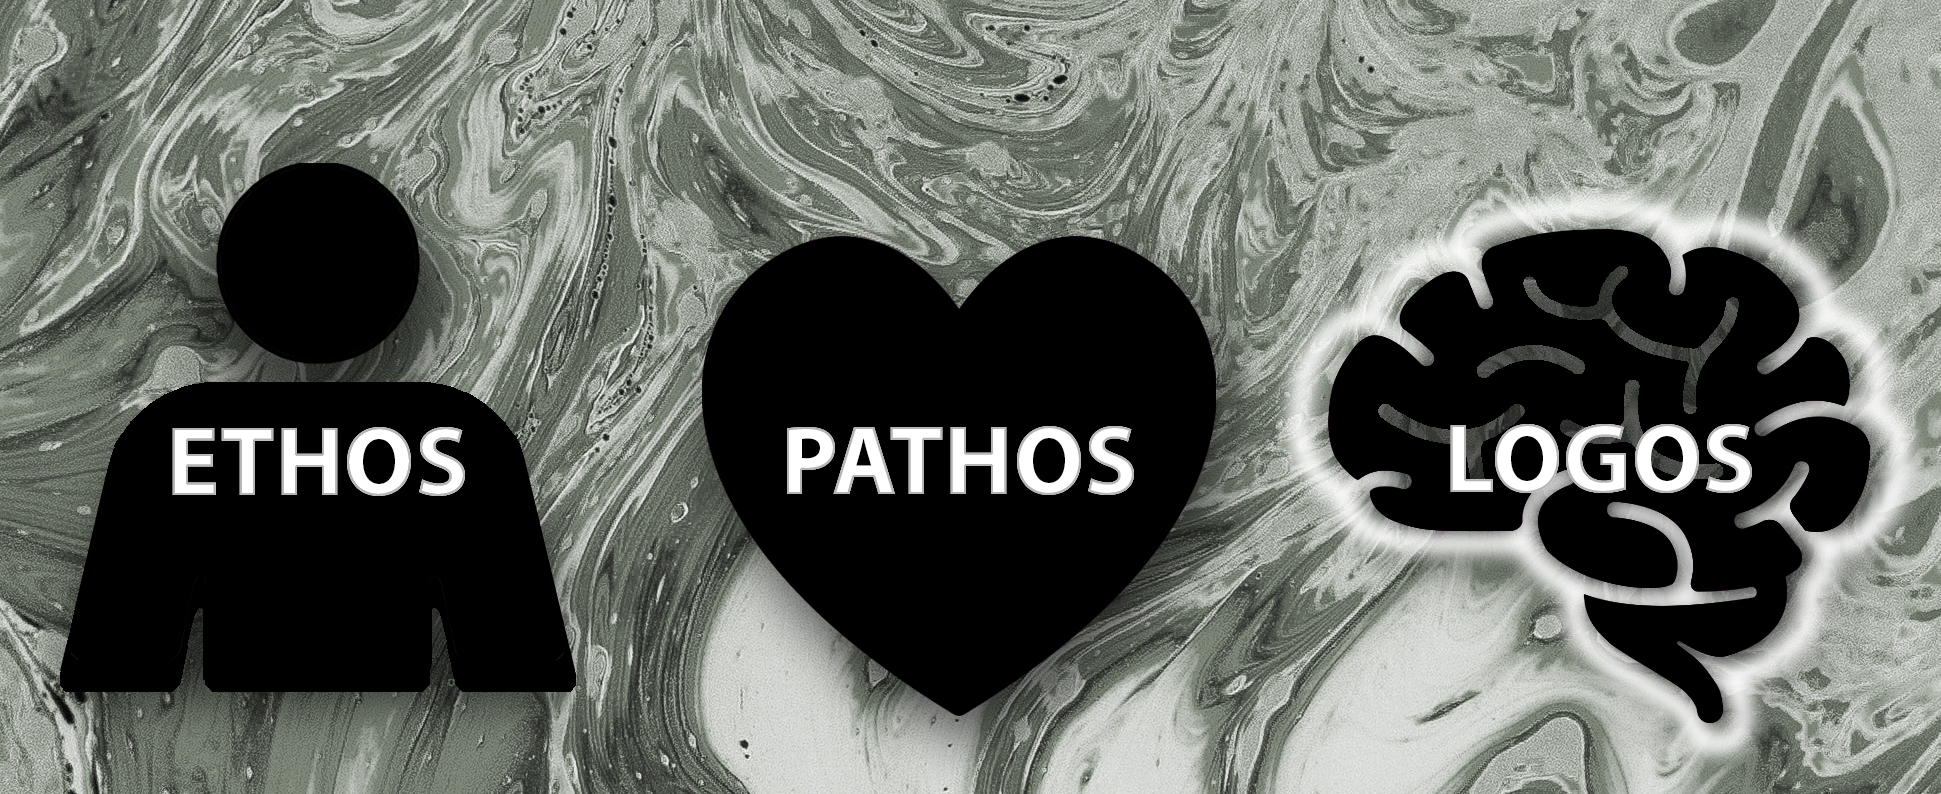 ethos (credibility/ethics), pathos (heart), logos (logic/brain)